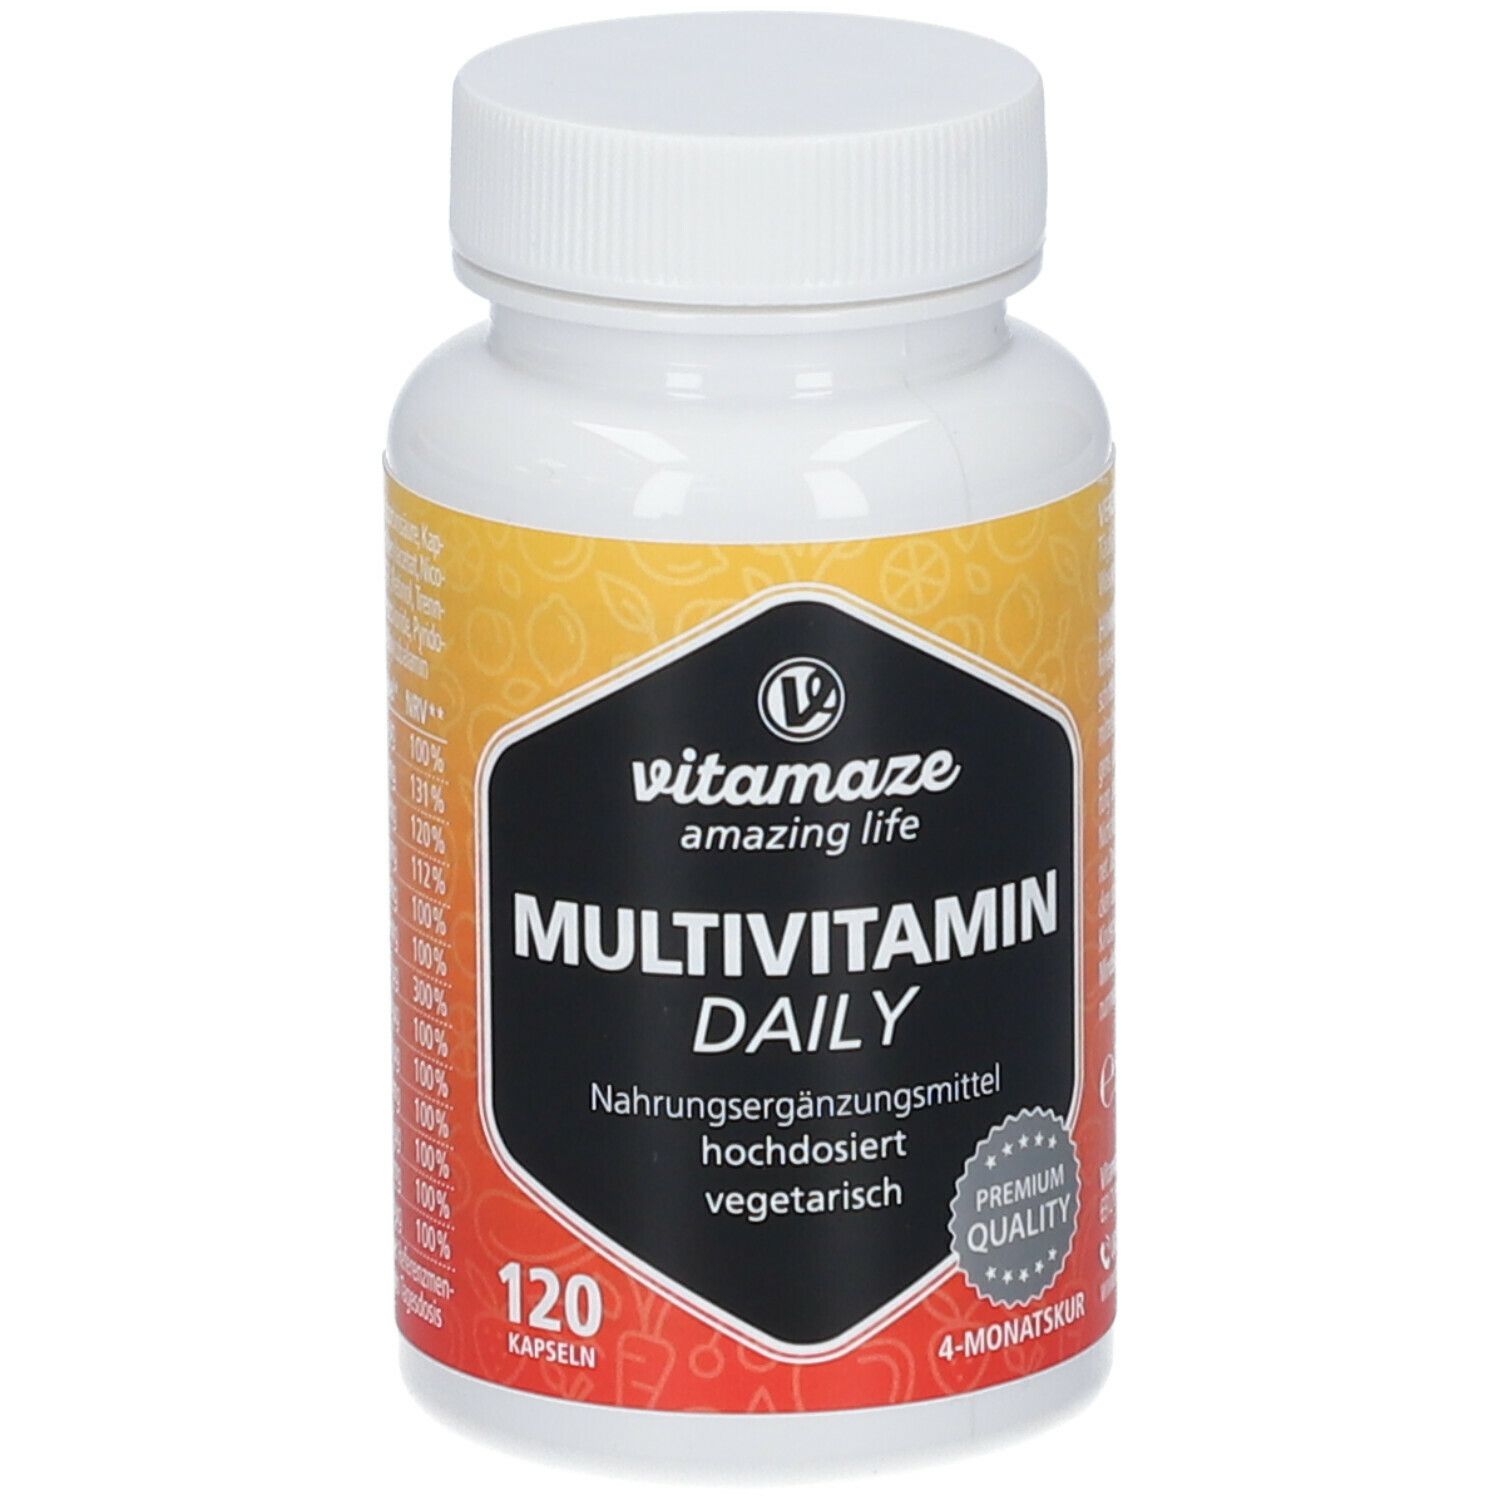 Multivitamin Daily dosage élevé